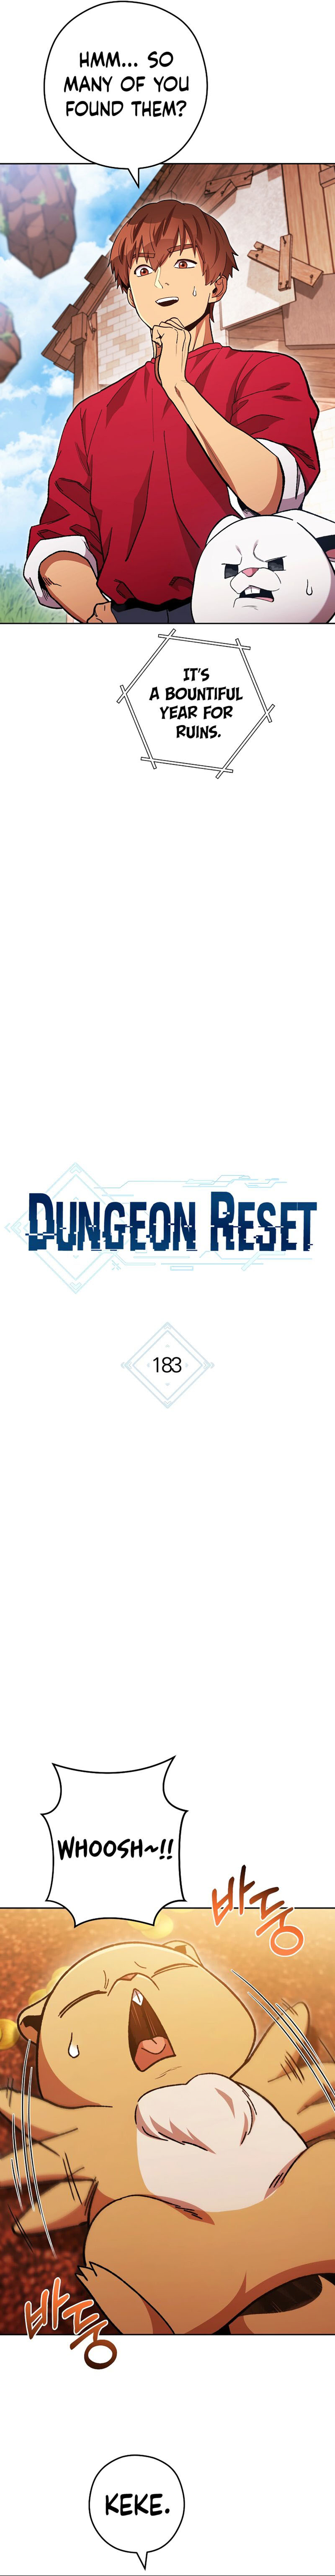 Dungeon Reset 183 2